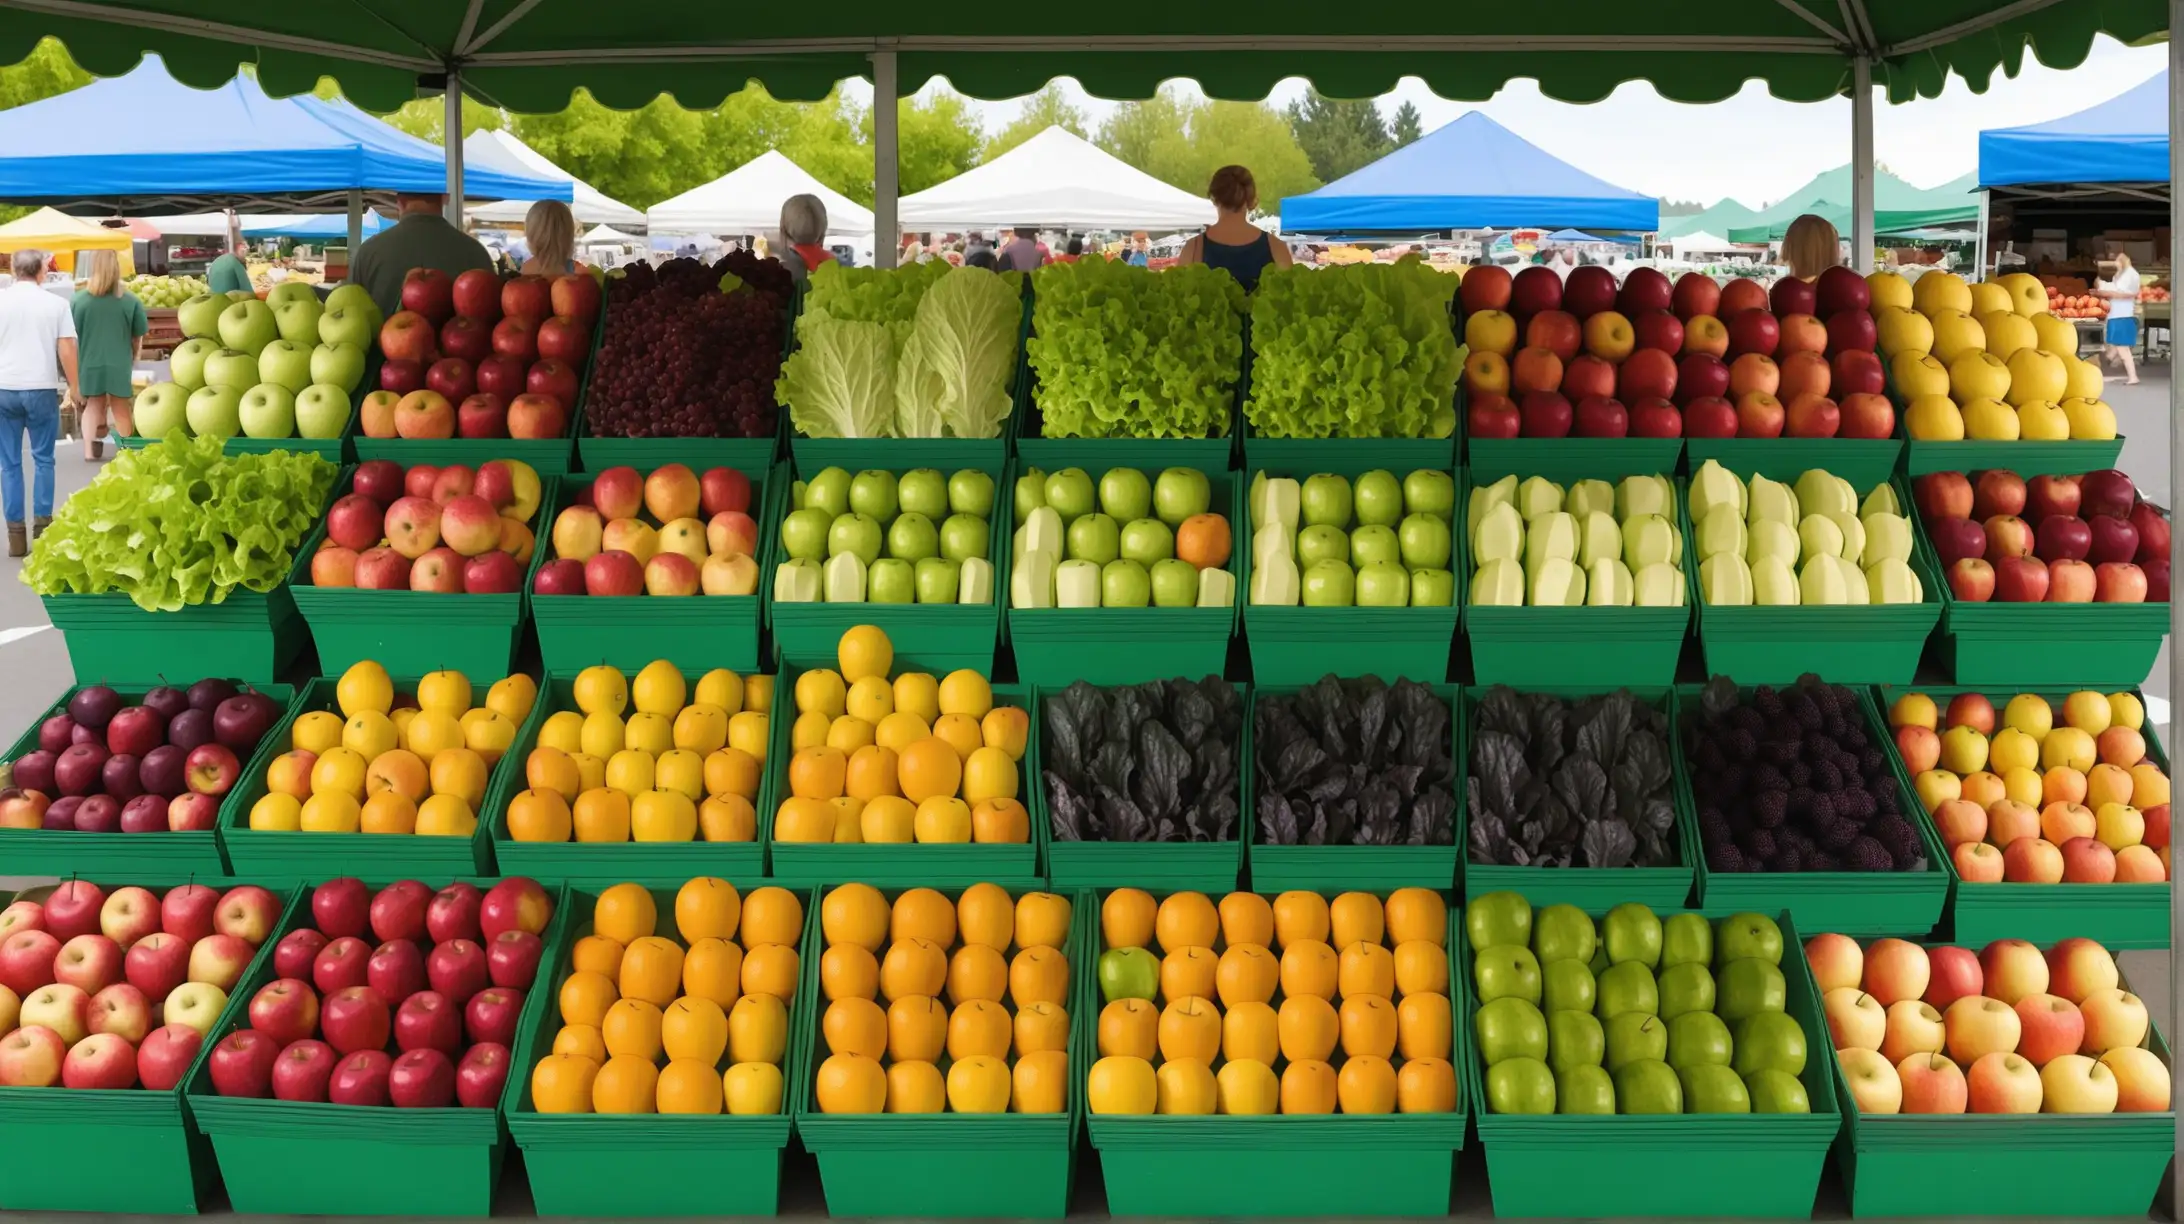 Fruit stand, farmers market, straight on shot of fruit selection, apples lettuce